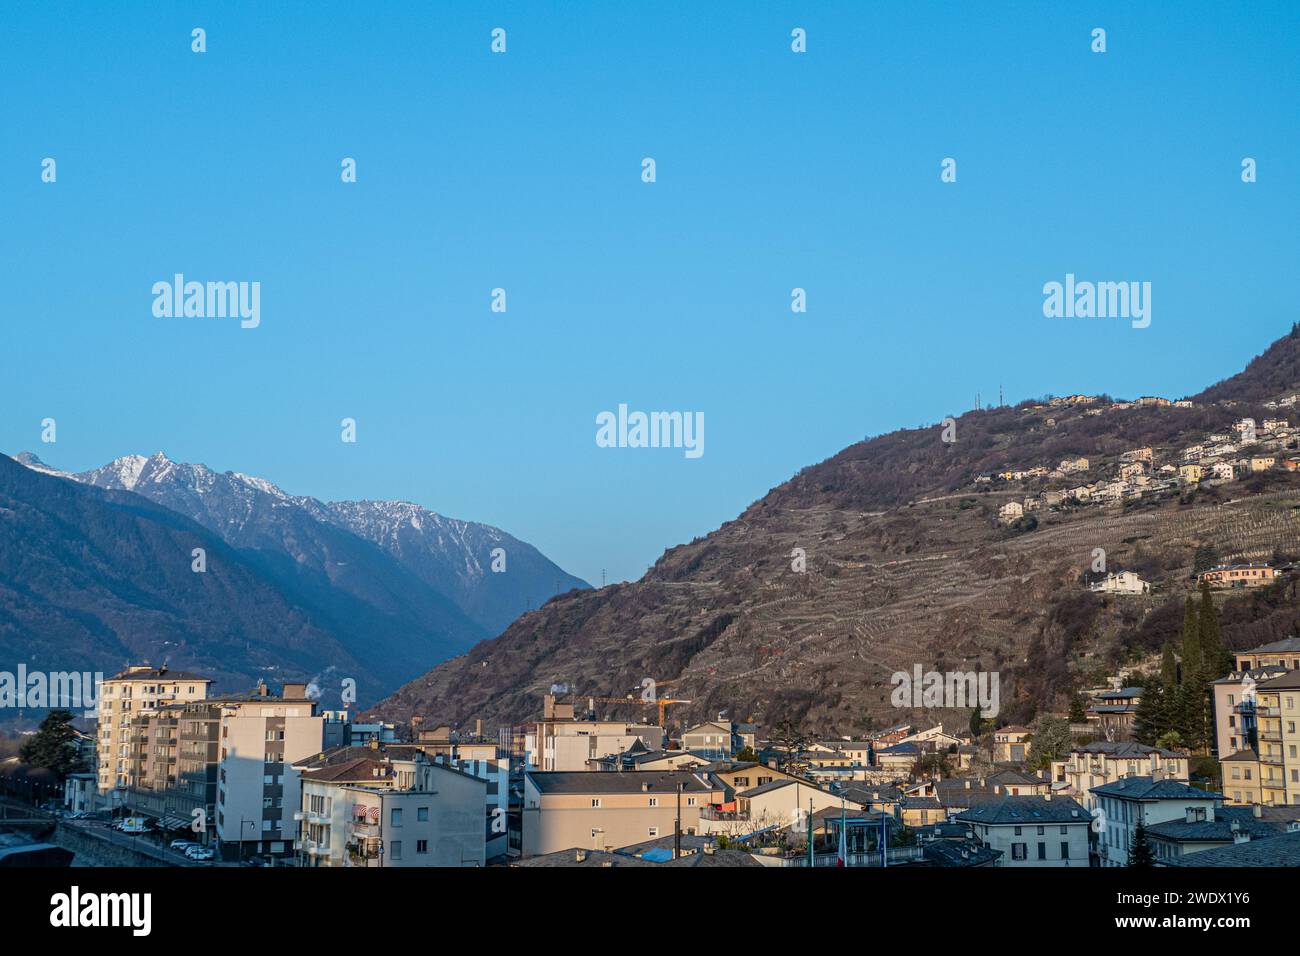 scenic view to village of Sondrio in the alpine region of Italy Stock Photo